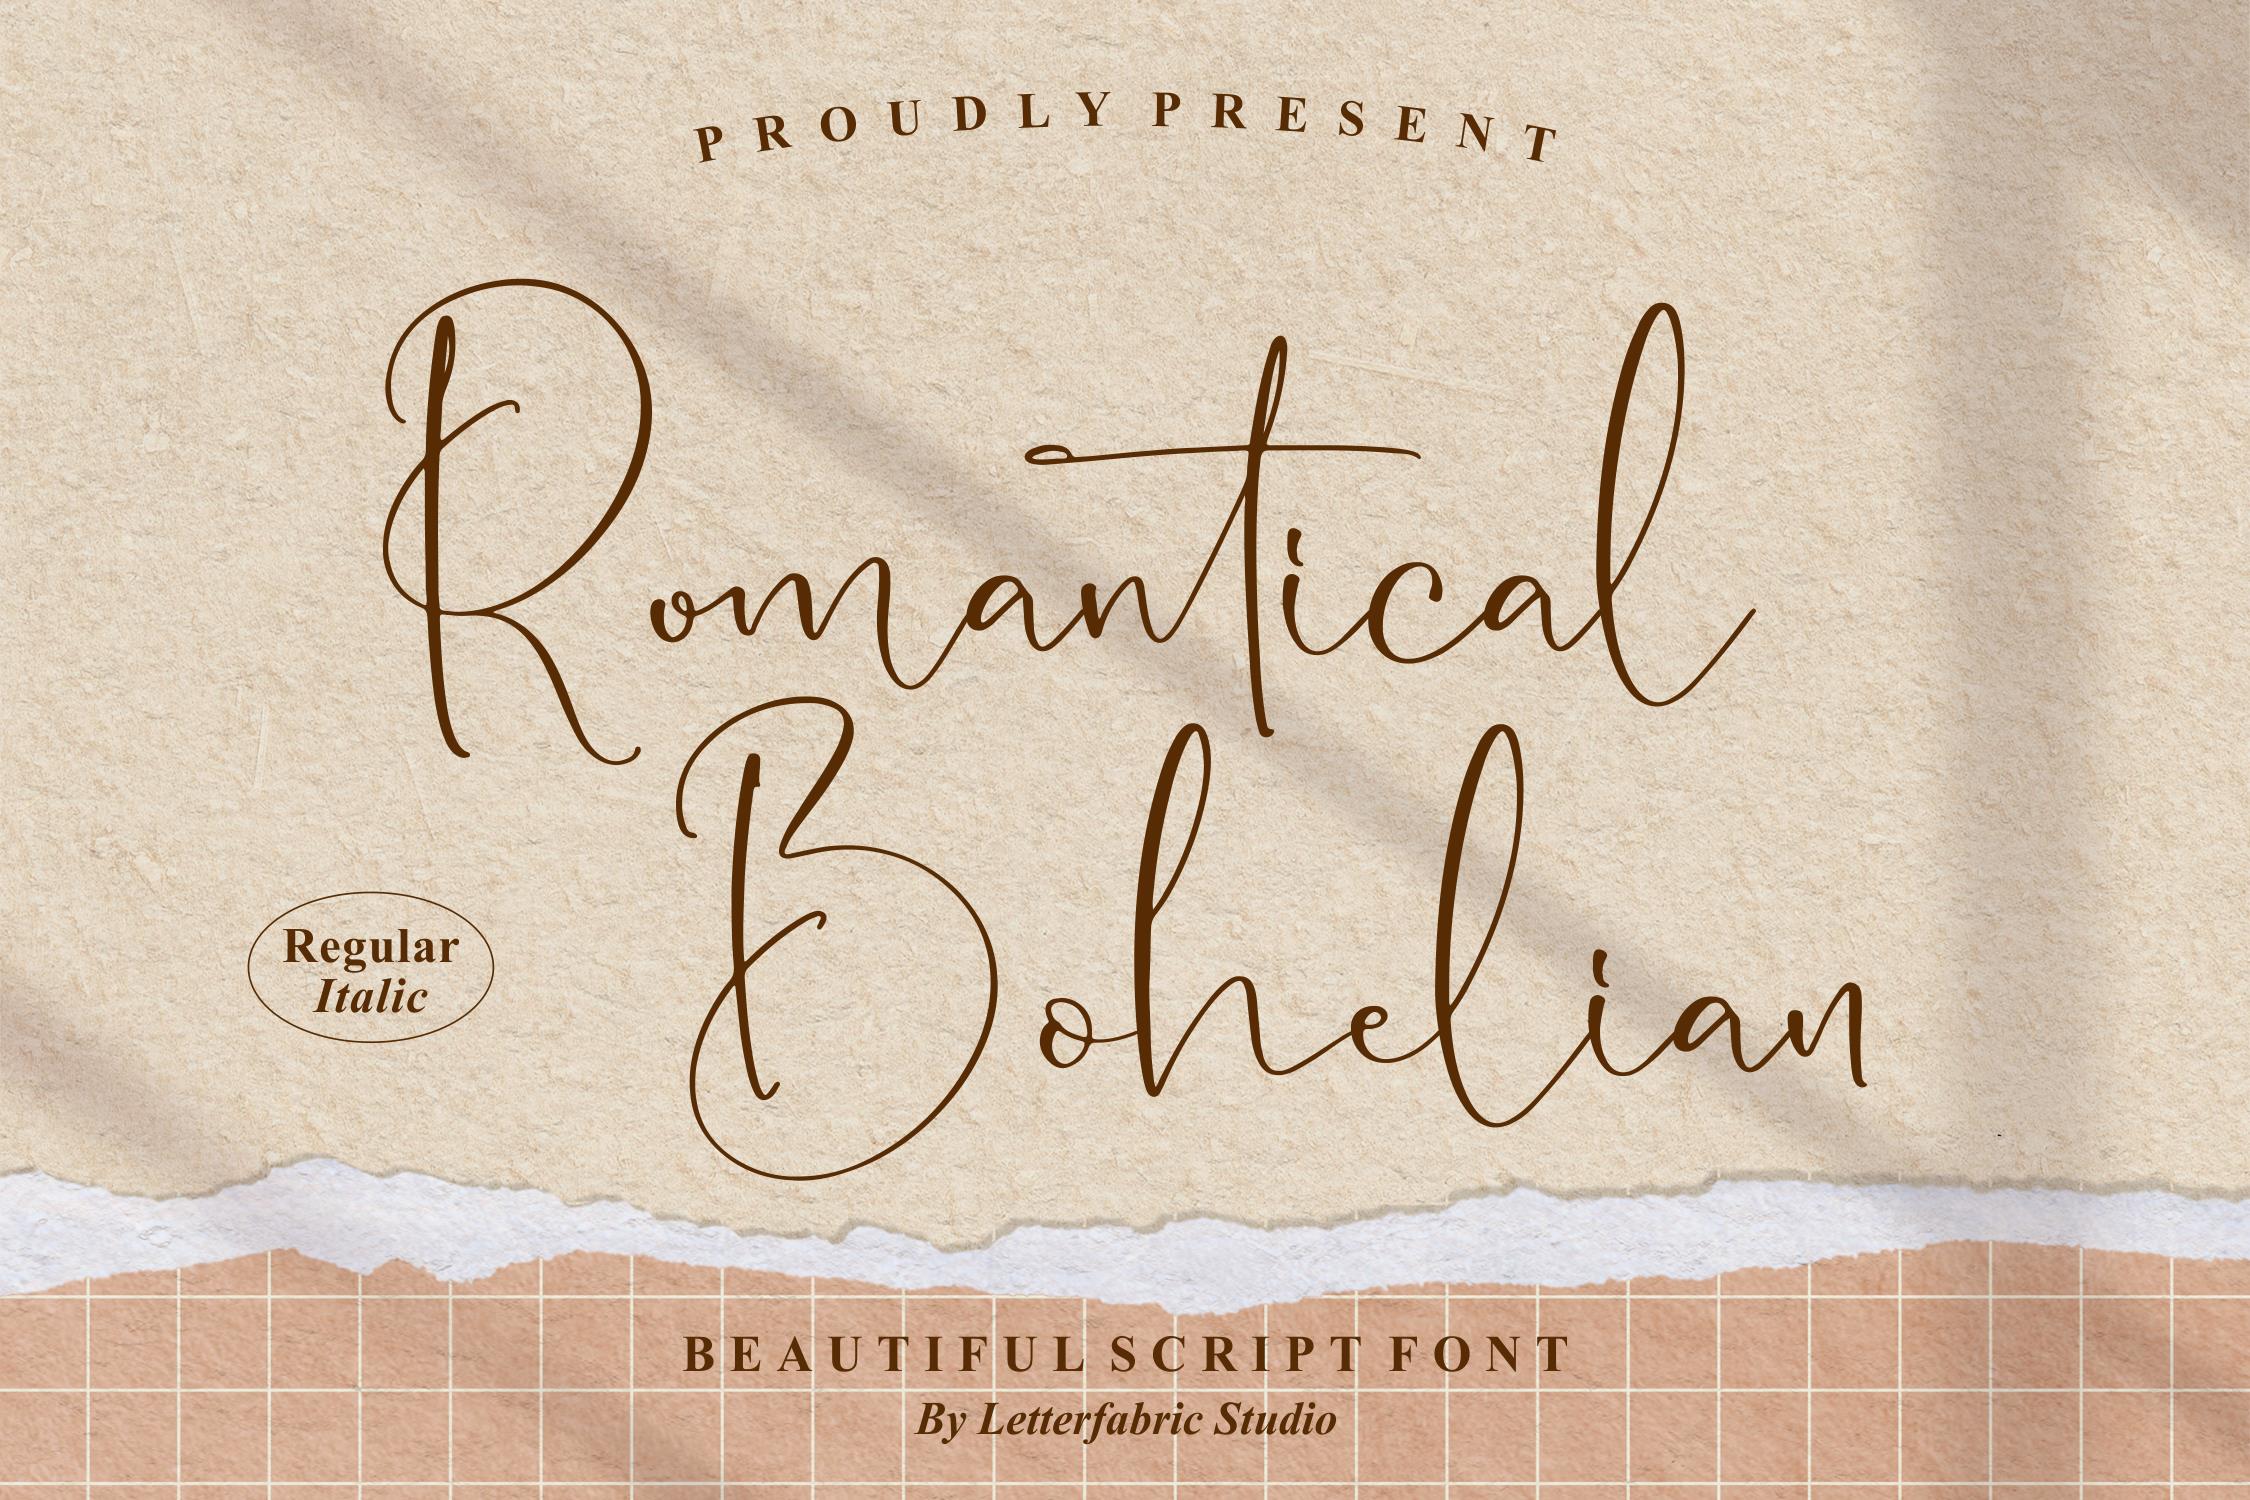 Romantical Bohelian Script Font